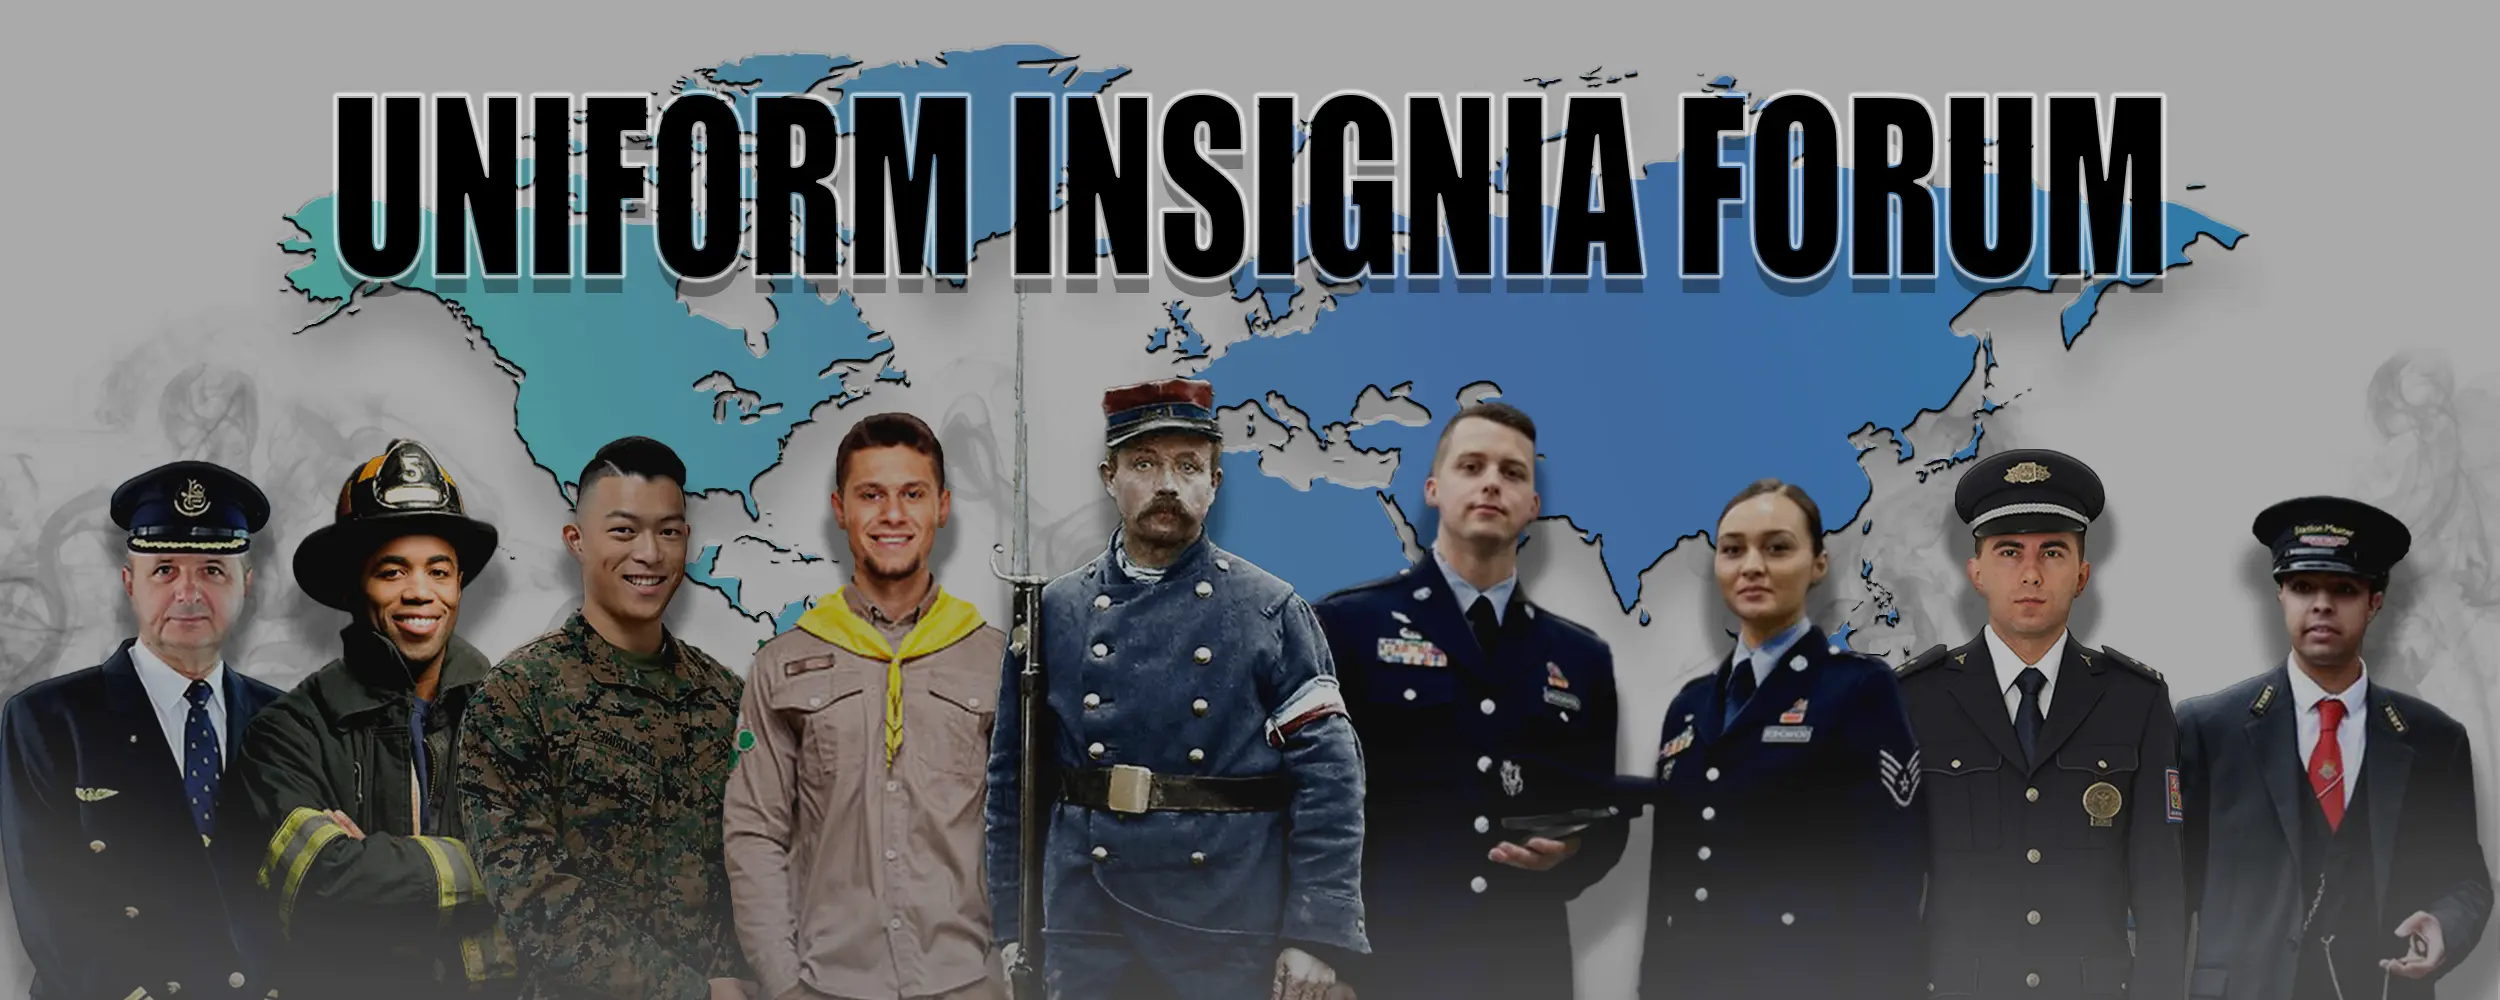 International Encyclopedia of Uniform Insignia